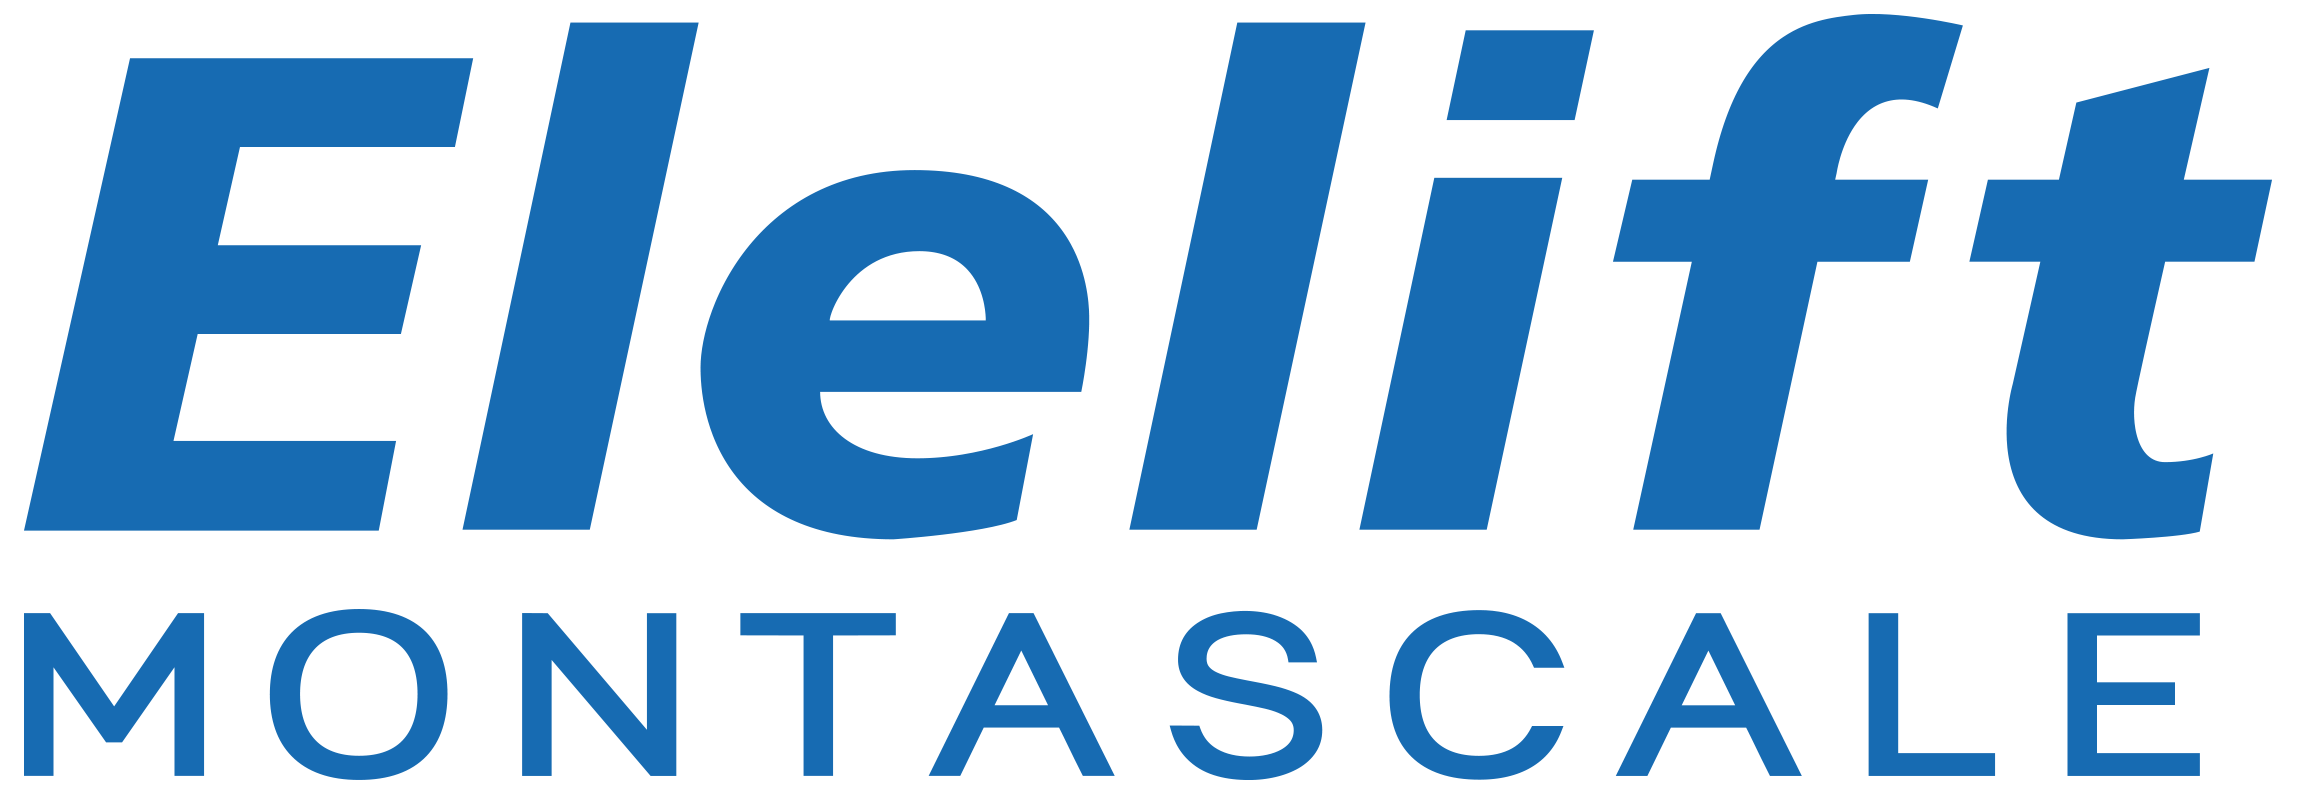 Logo Elelift montascale